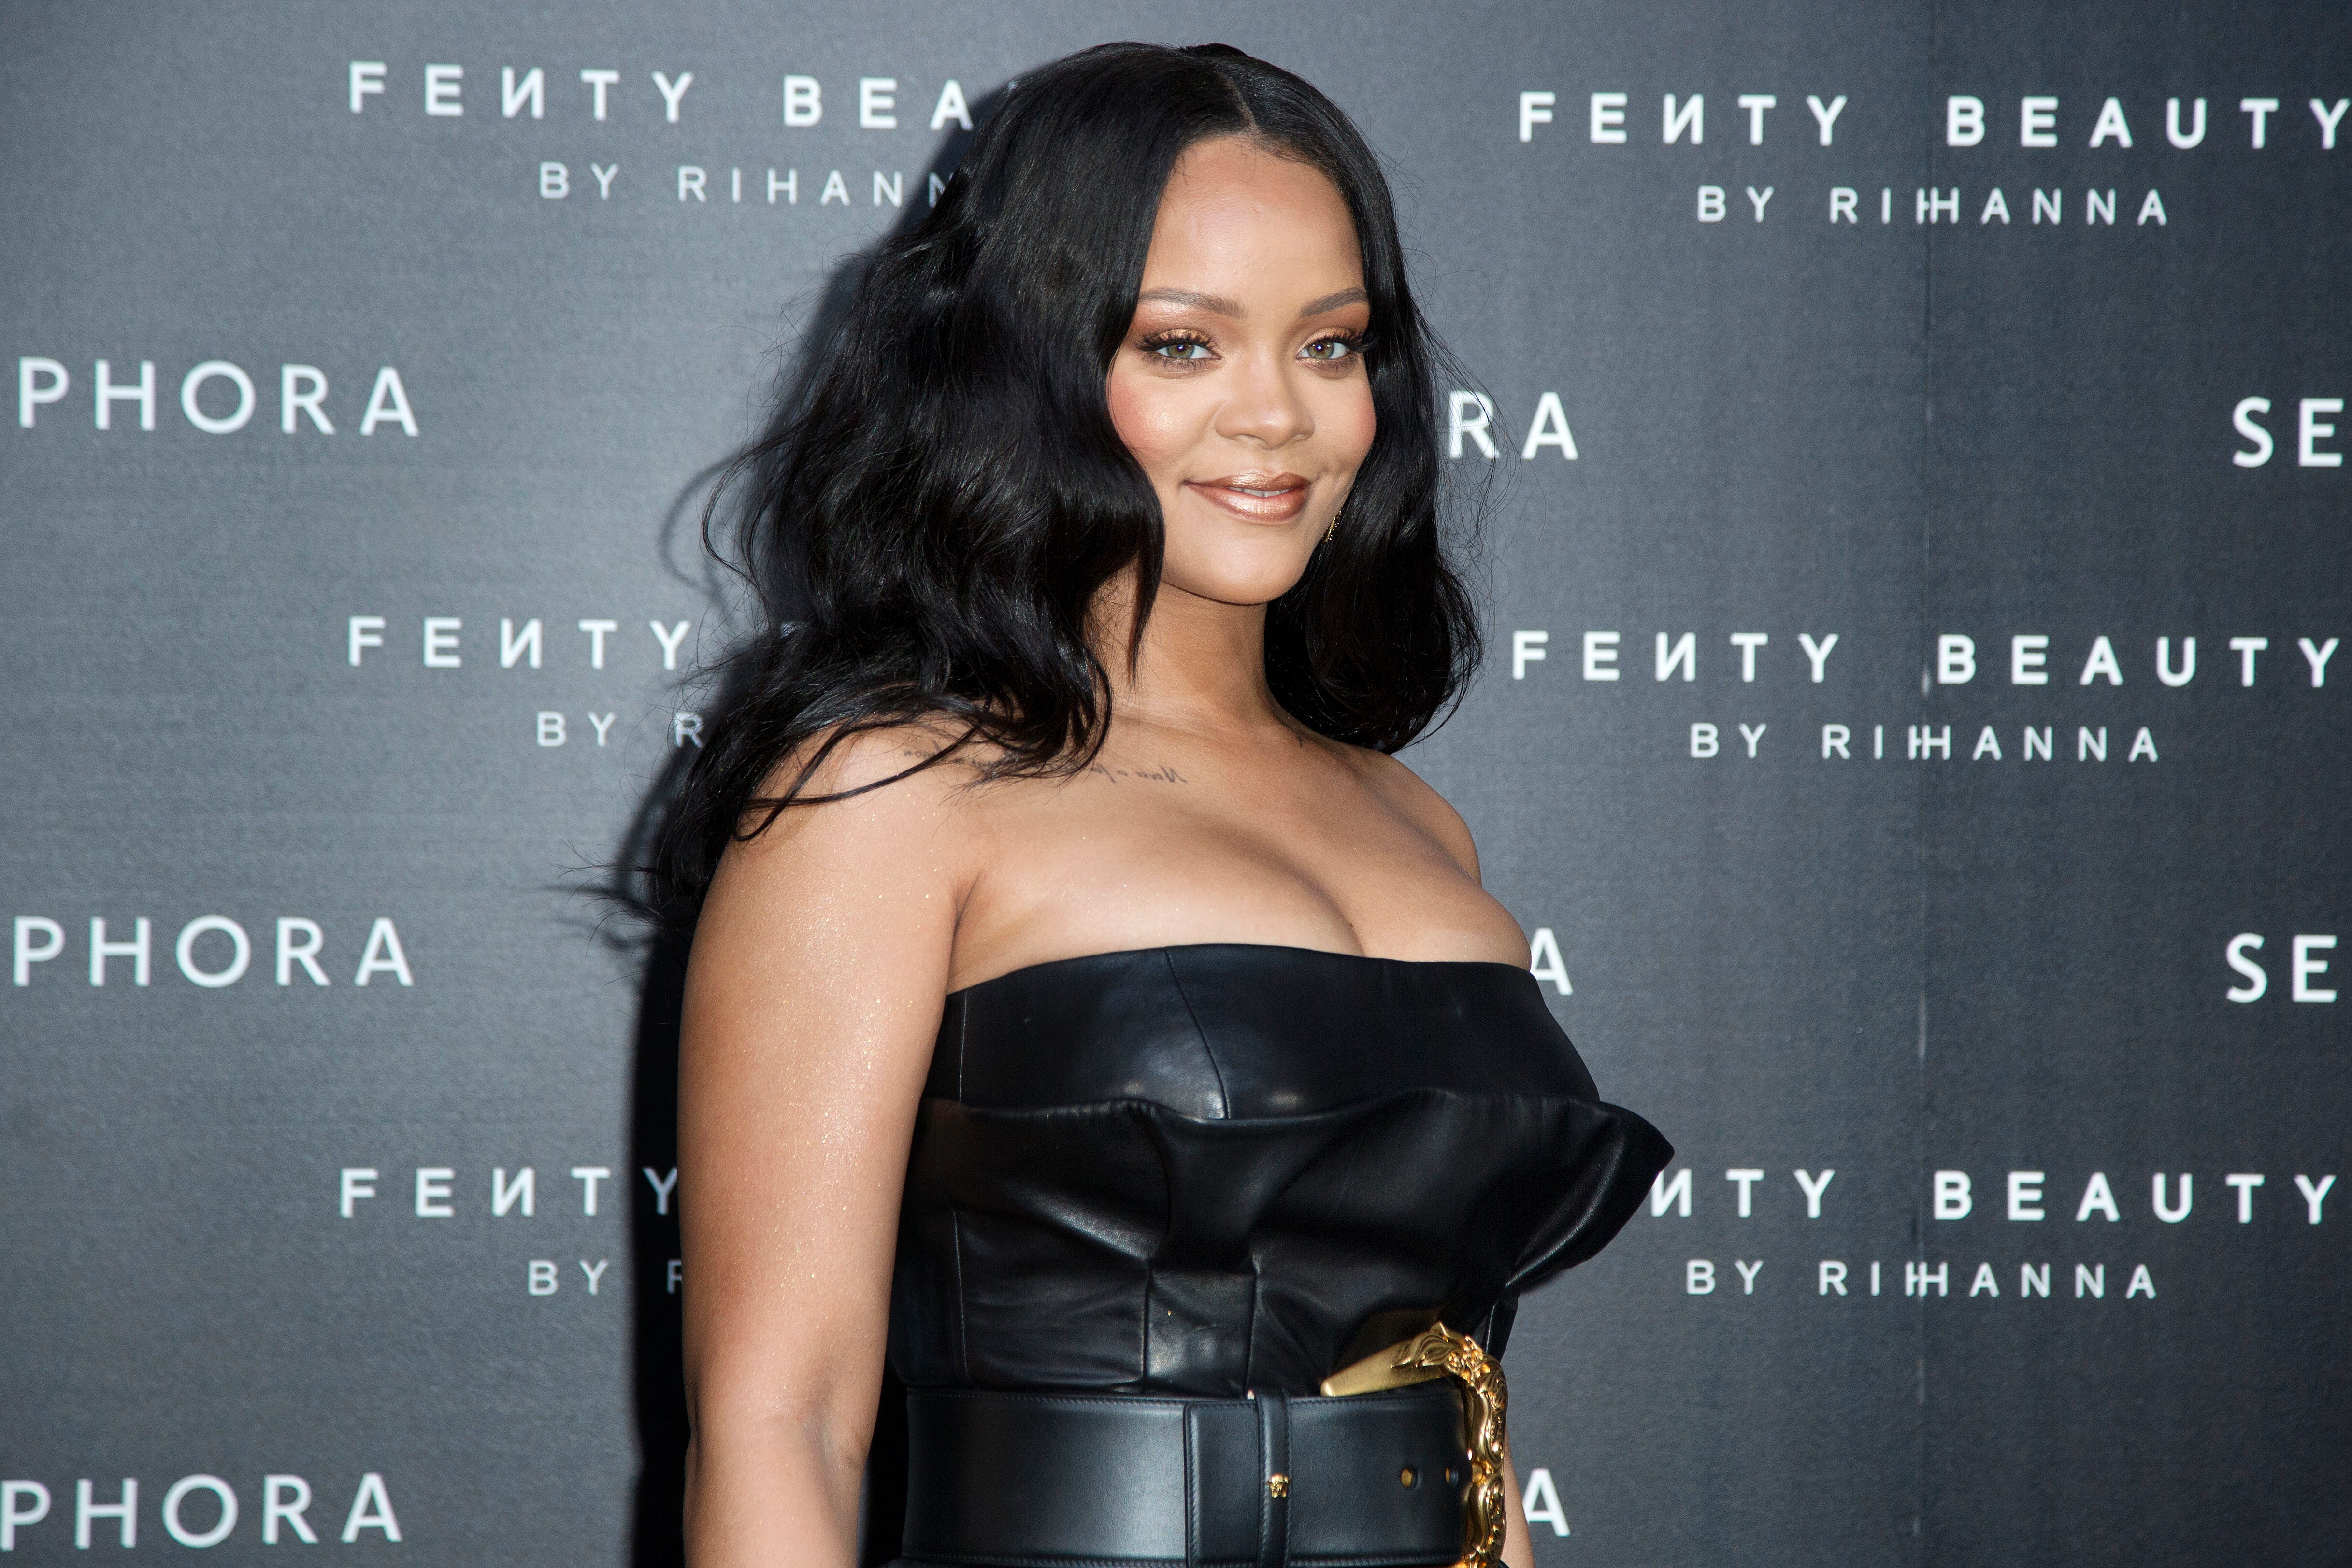 Rihanna's new album Anti: A track-by-track breakdown.